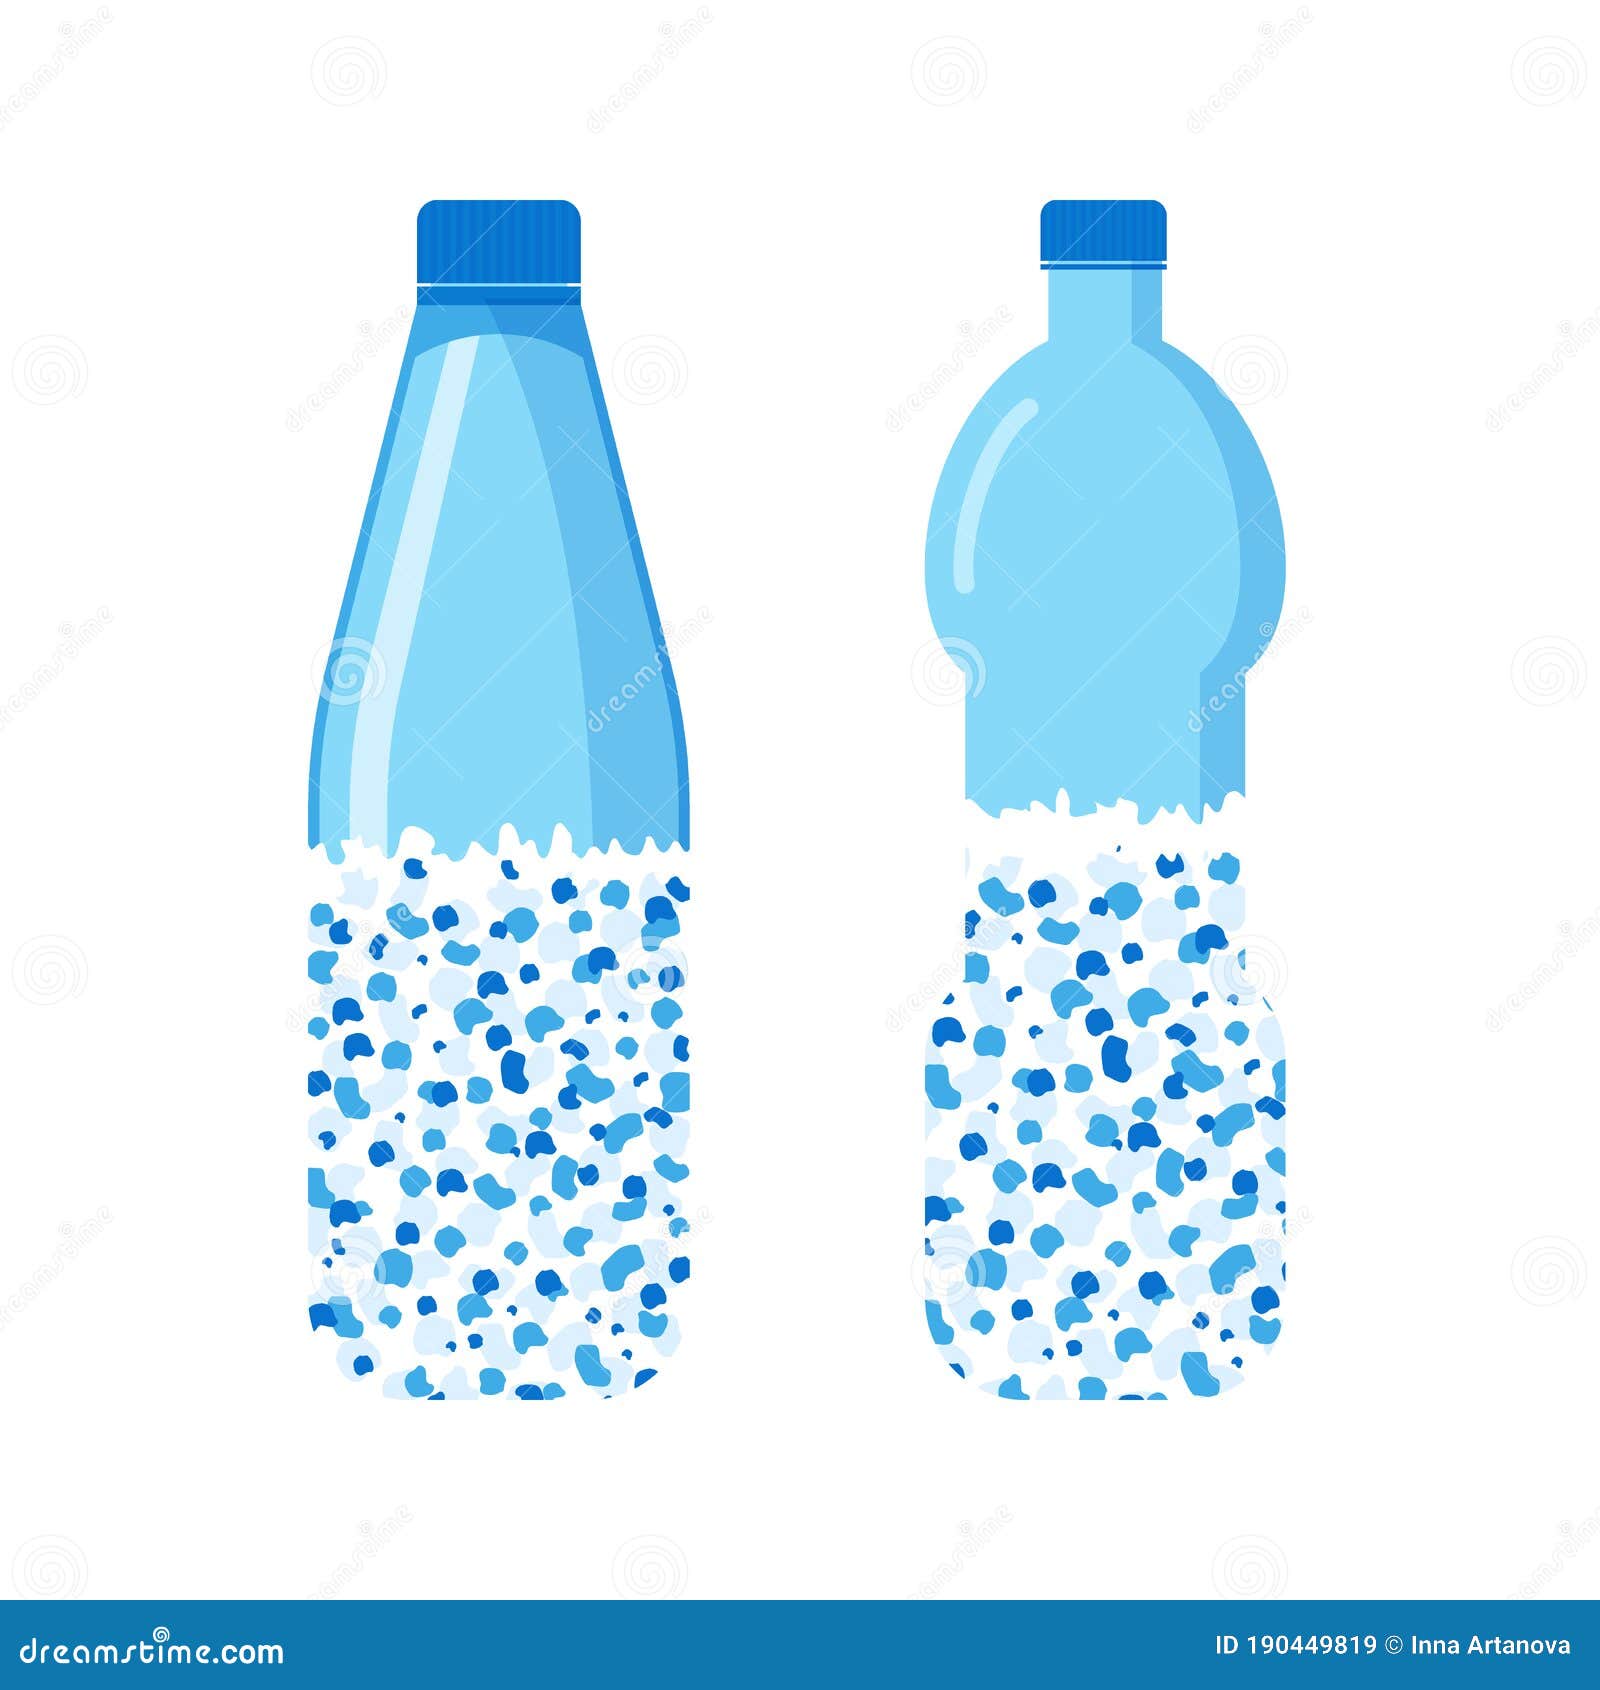 micro plastic pollution concept. microplastic in water.  .